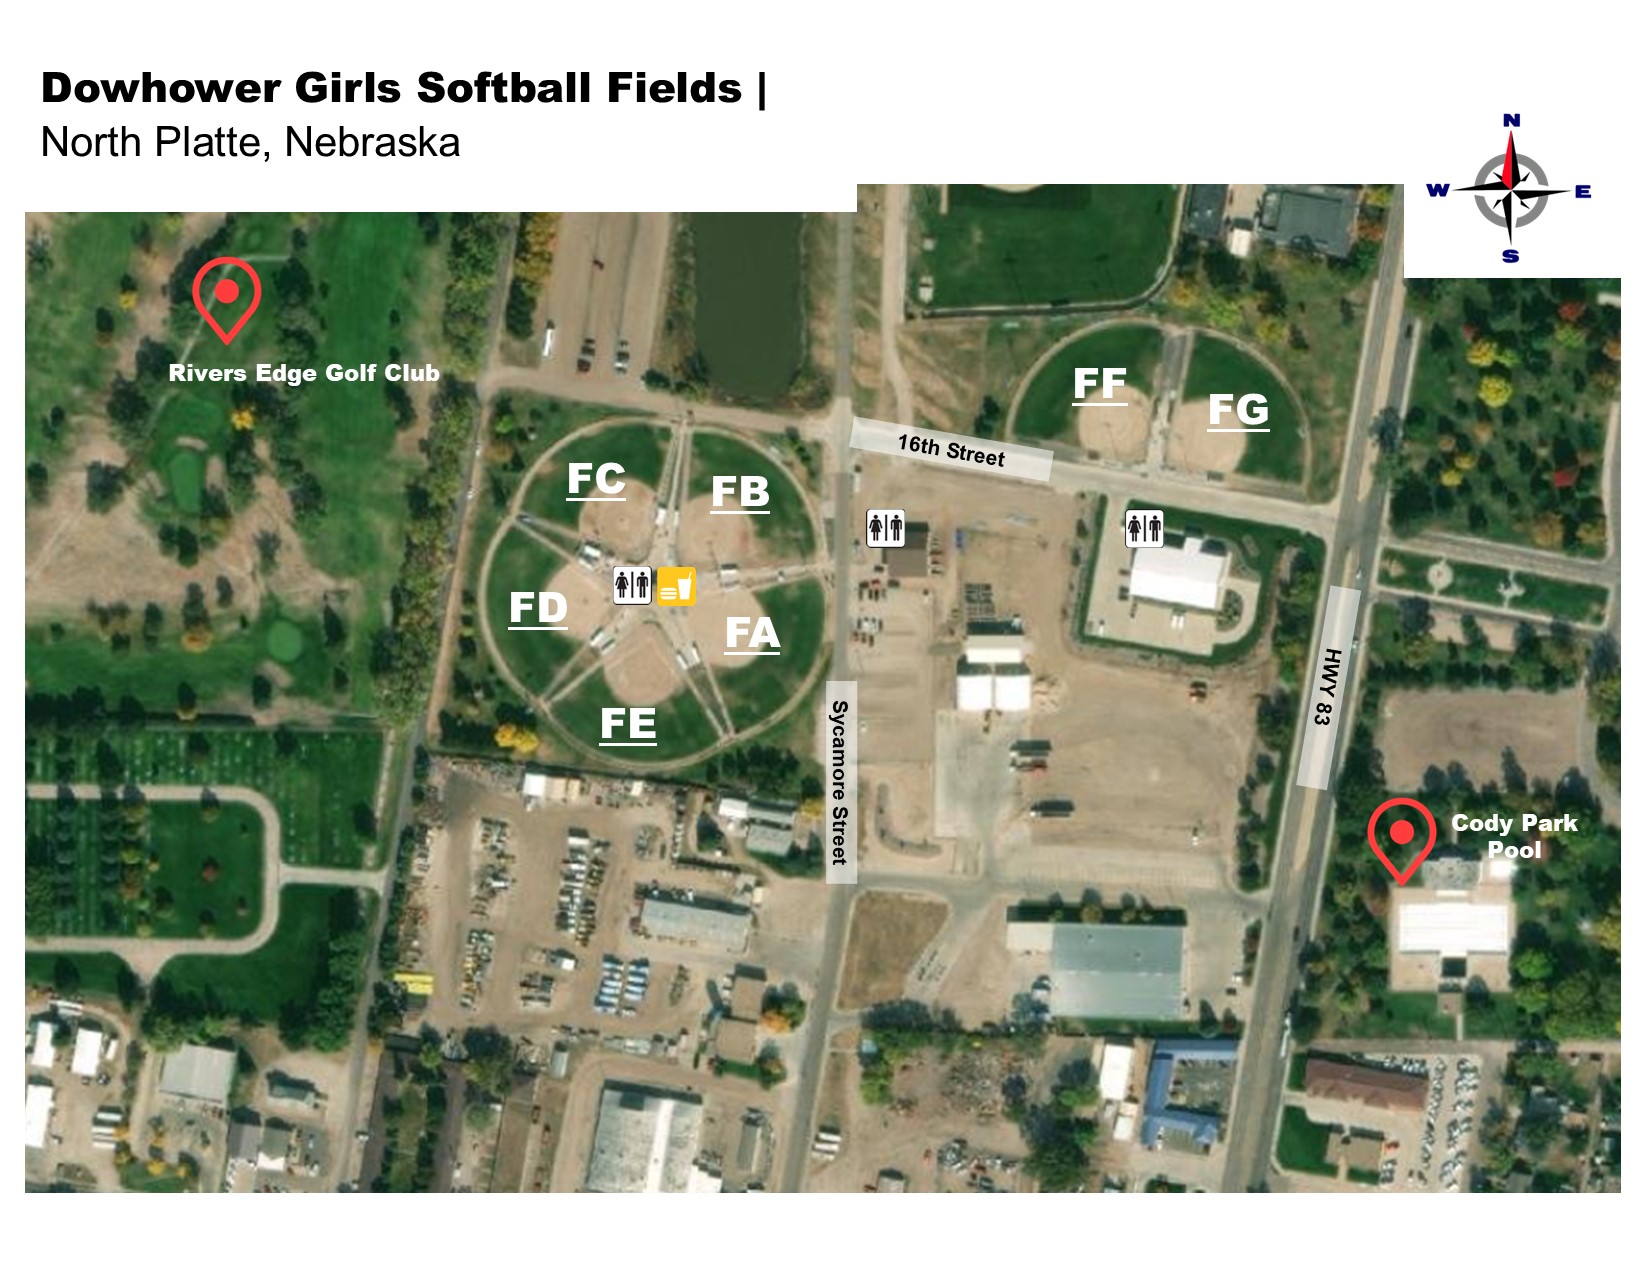 dowhower softball complex, field map, platte valley girls softball association, play north platte, city of north platte, nebraska, ne